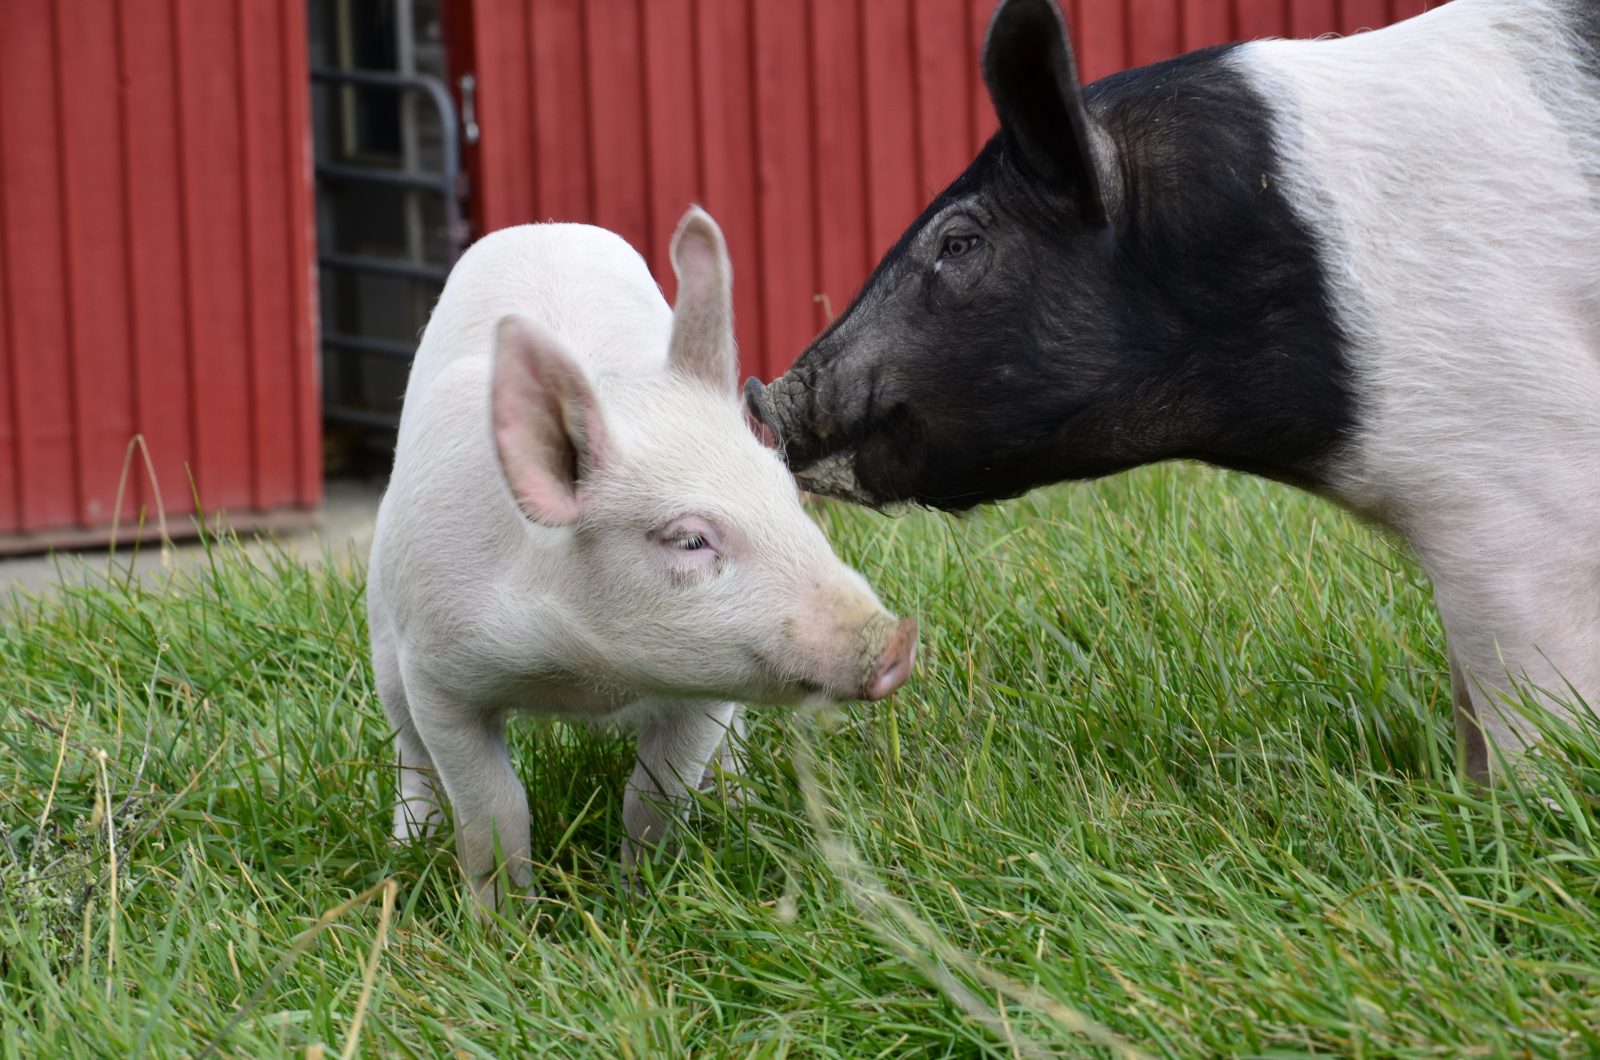 Jane pig meets Sebastian pig